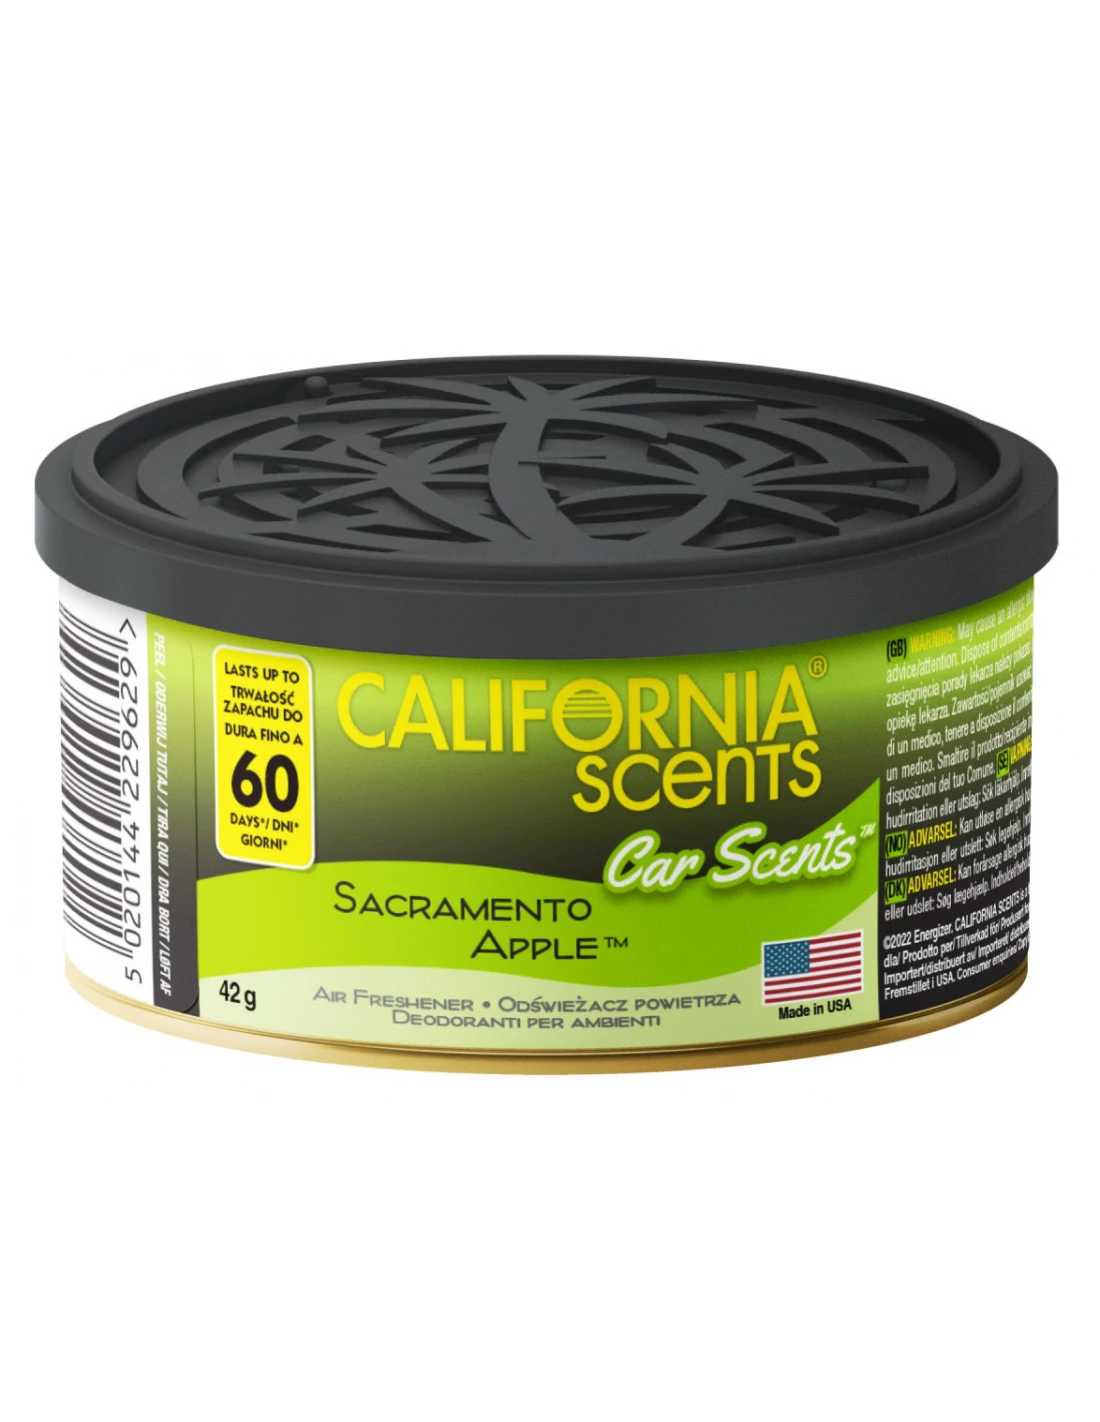 California Scents Air Freshener - Coronado Cherry – GB Detailing